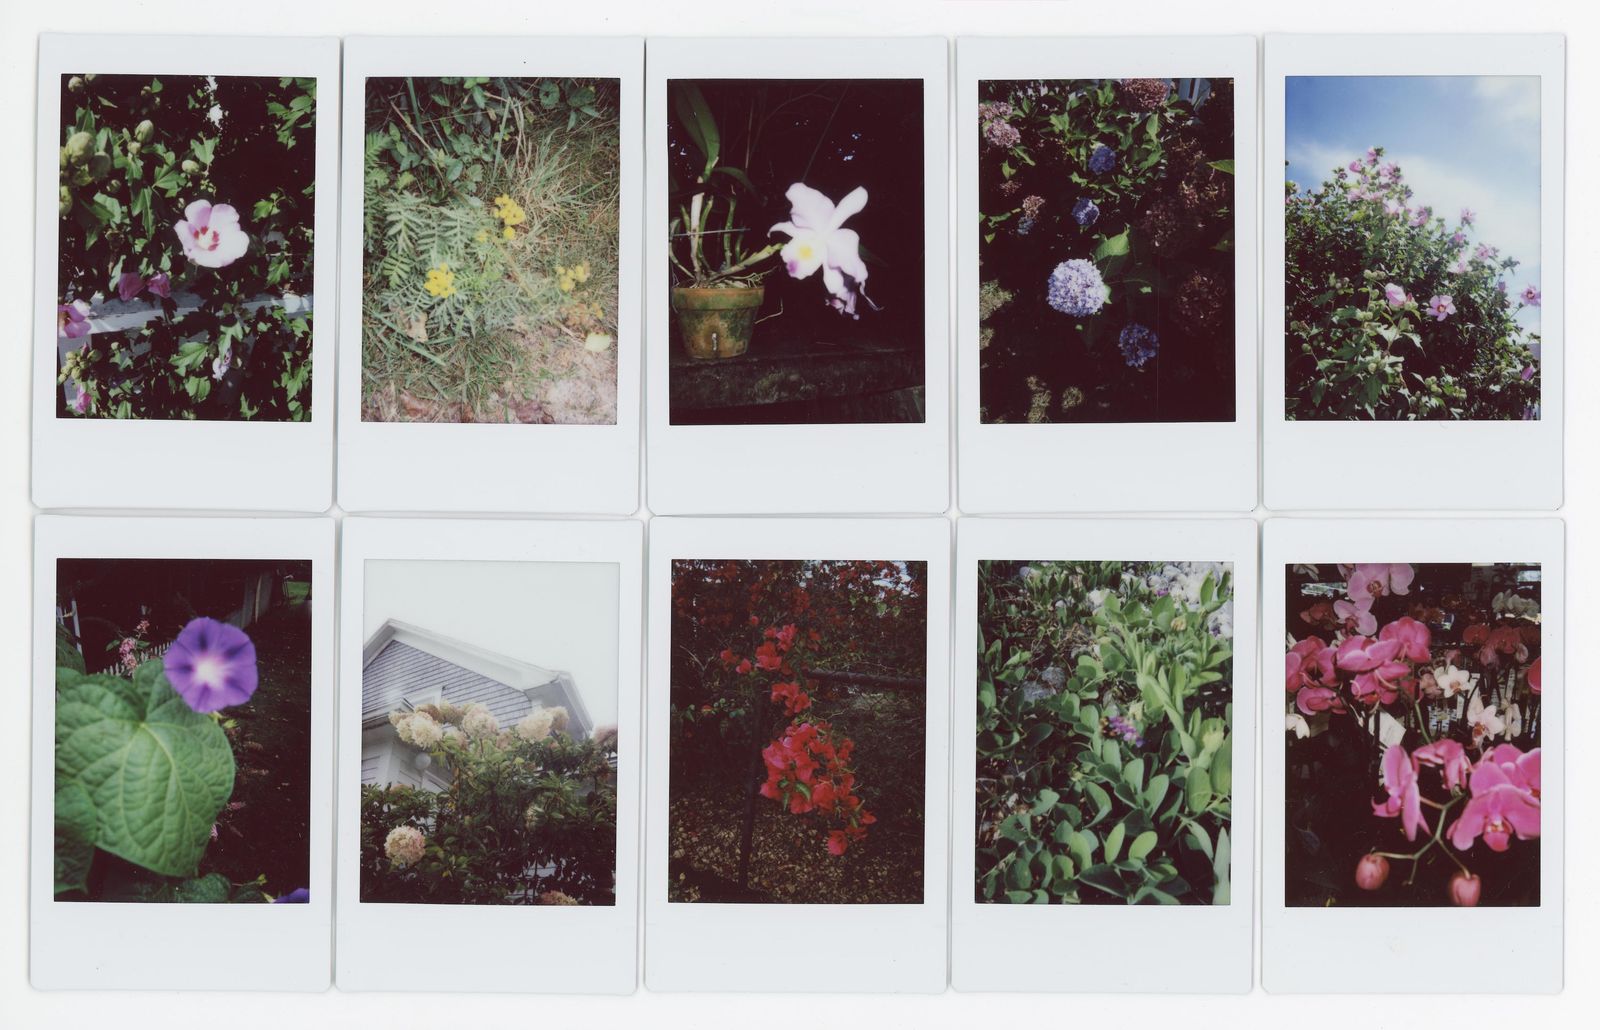 © RACHEL TREIDE - "A Minute Fraction of All the Flowers I've Ever Seen," photographs 71-80